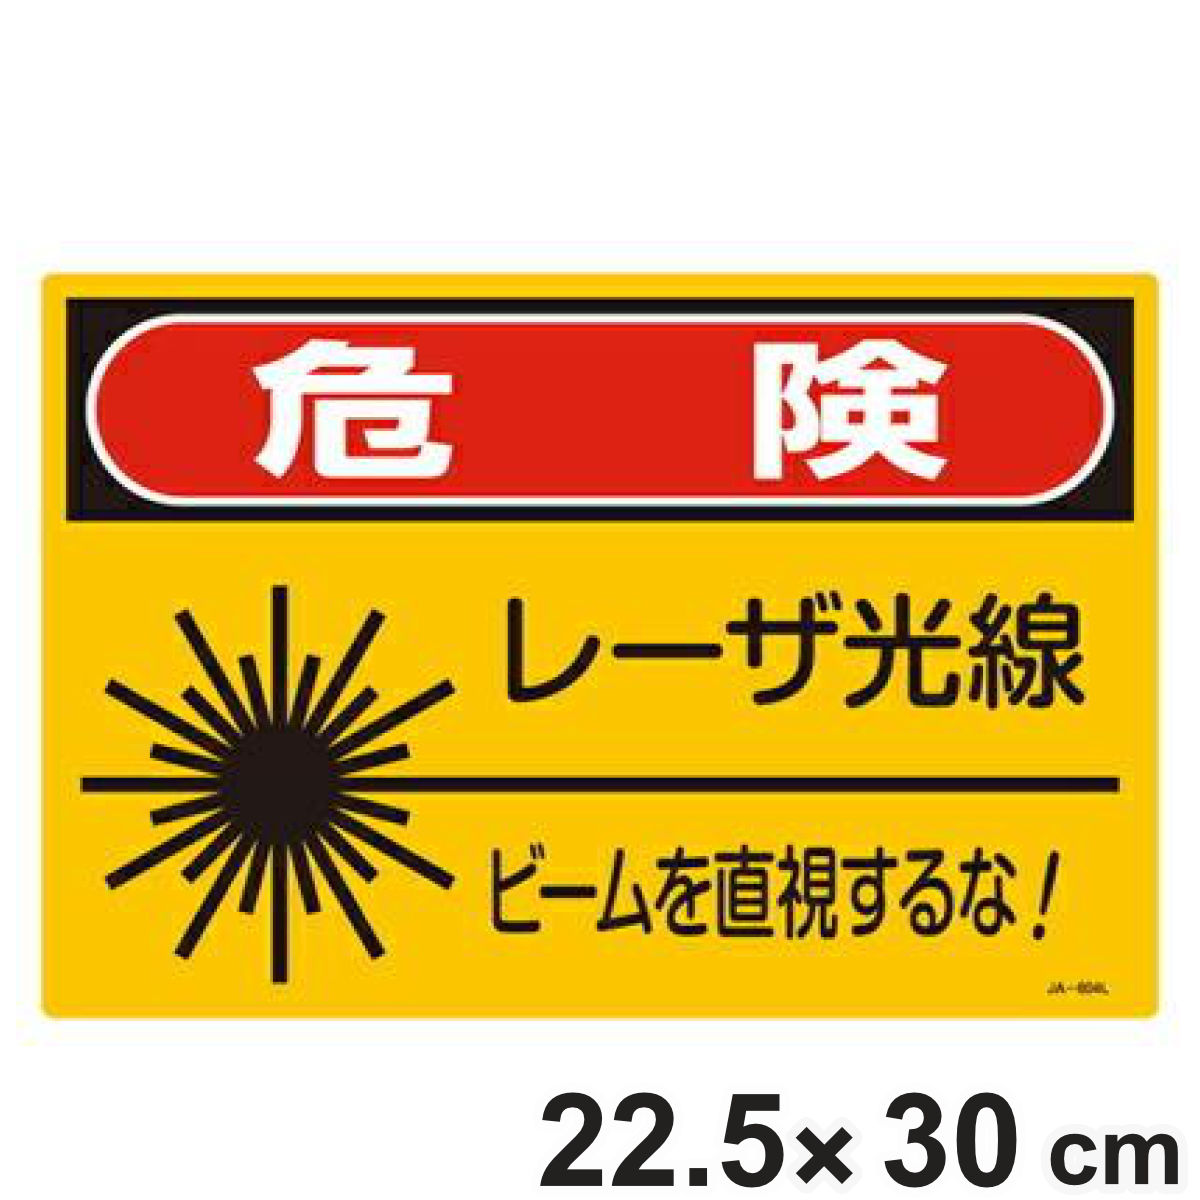 JISレーザ標識 「 危険 レーザ光線 ビームを直視するな 」 Sサイズ 硬質塩ビ製 （ 安全標識 表示シール レーザ光 ステッカー シール ラベ